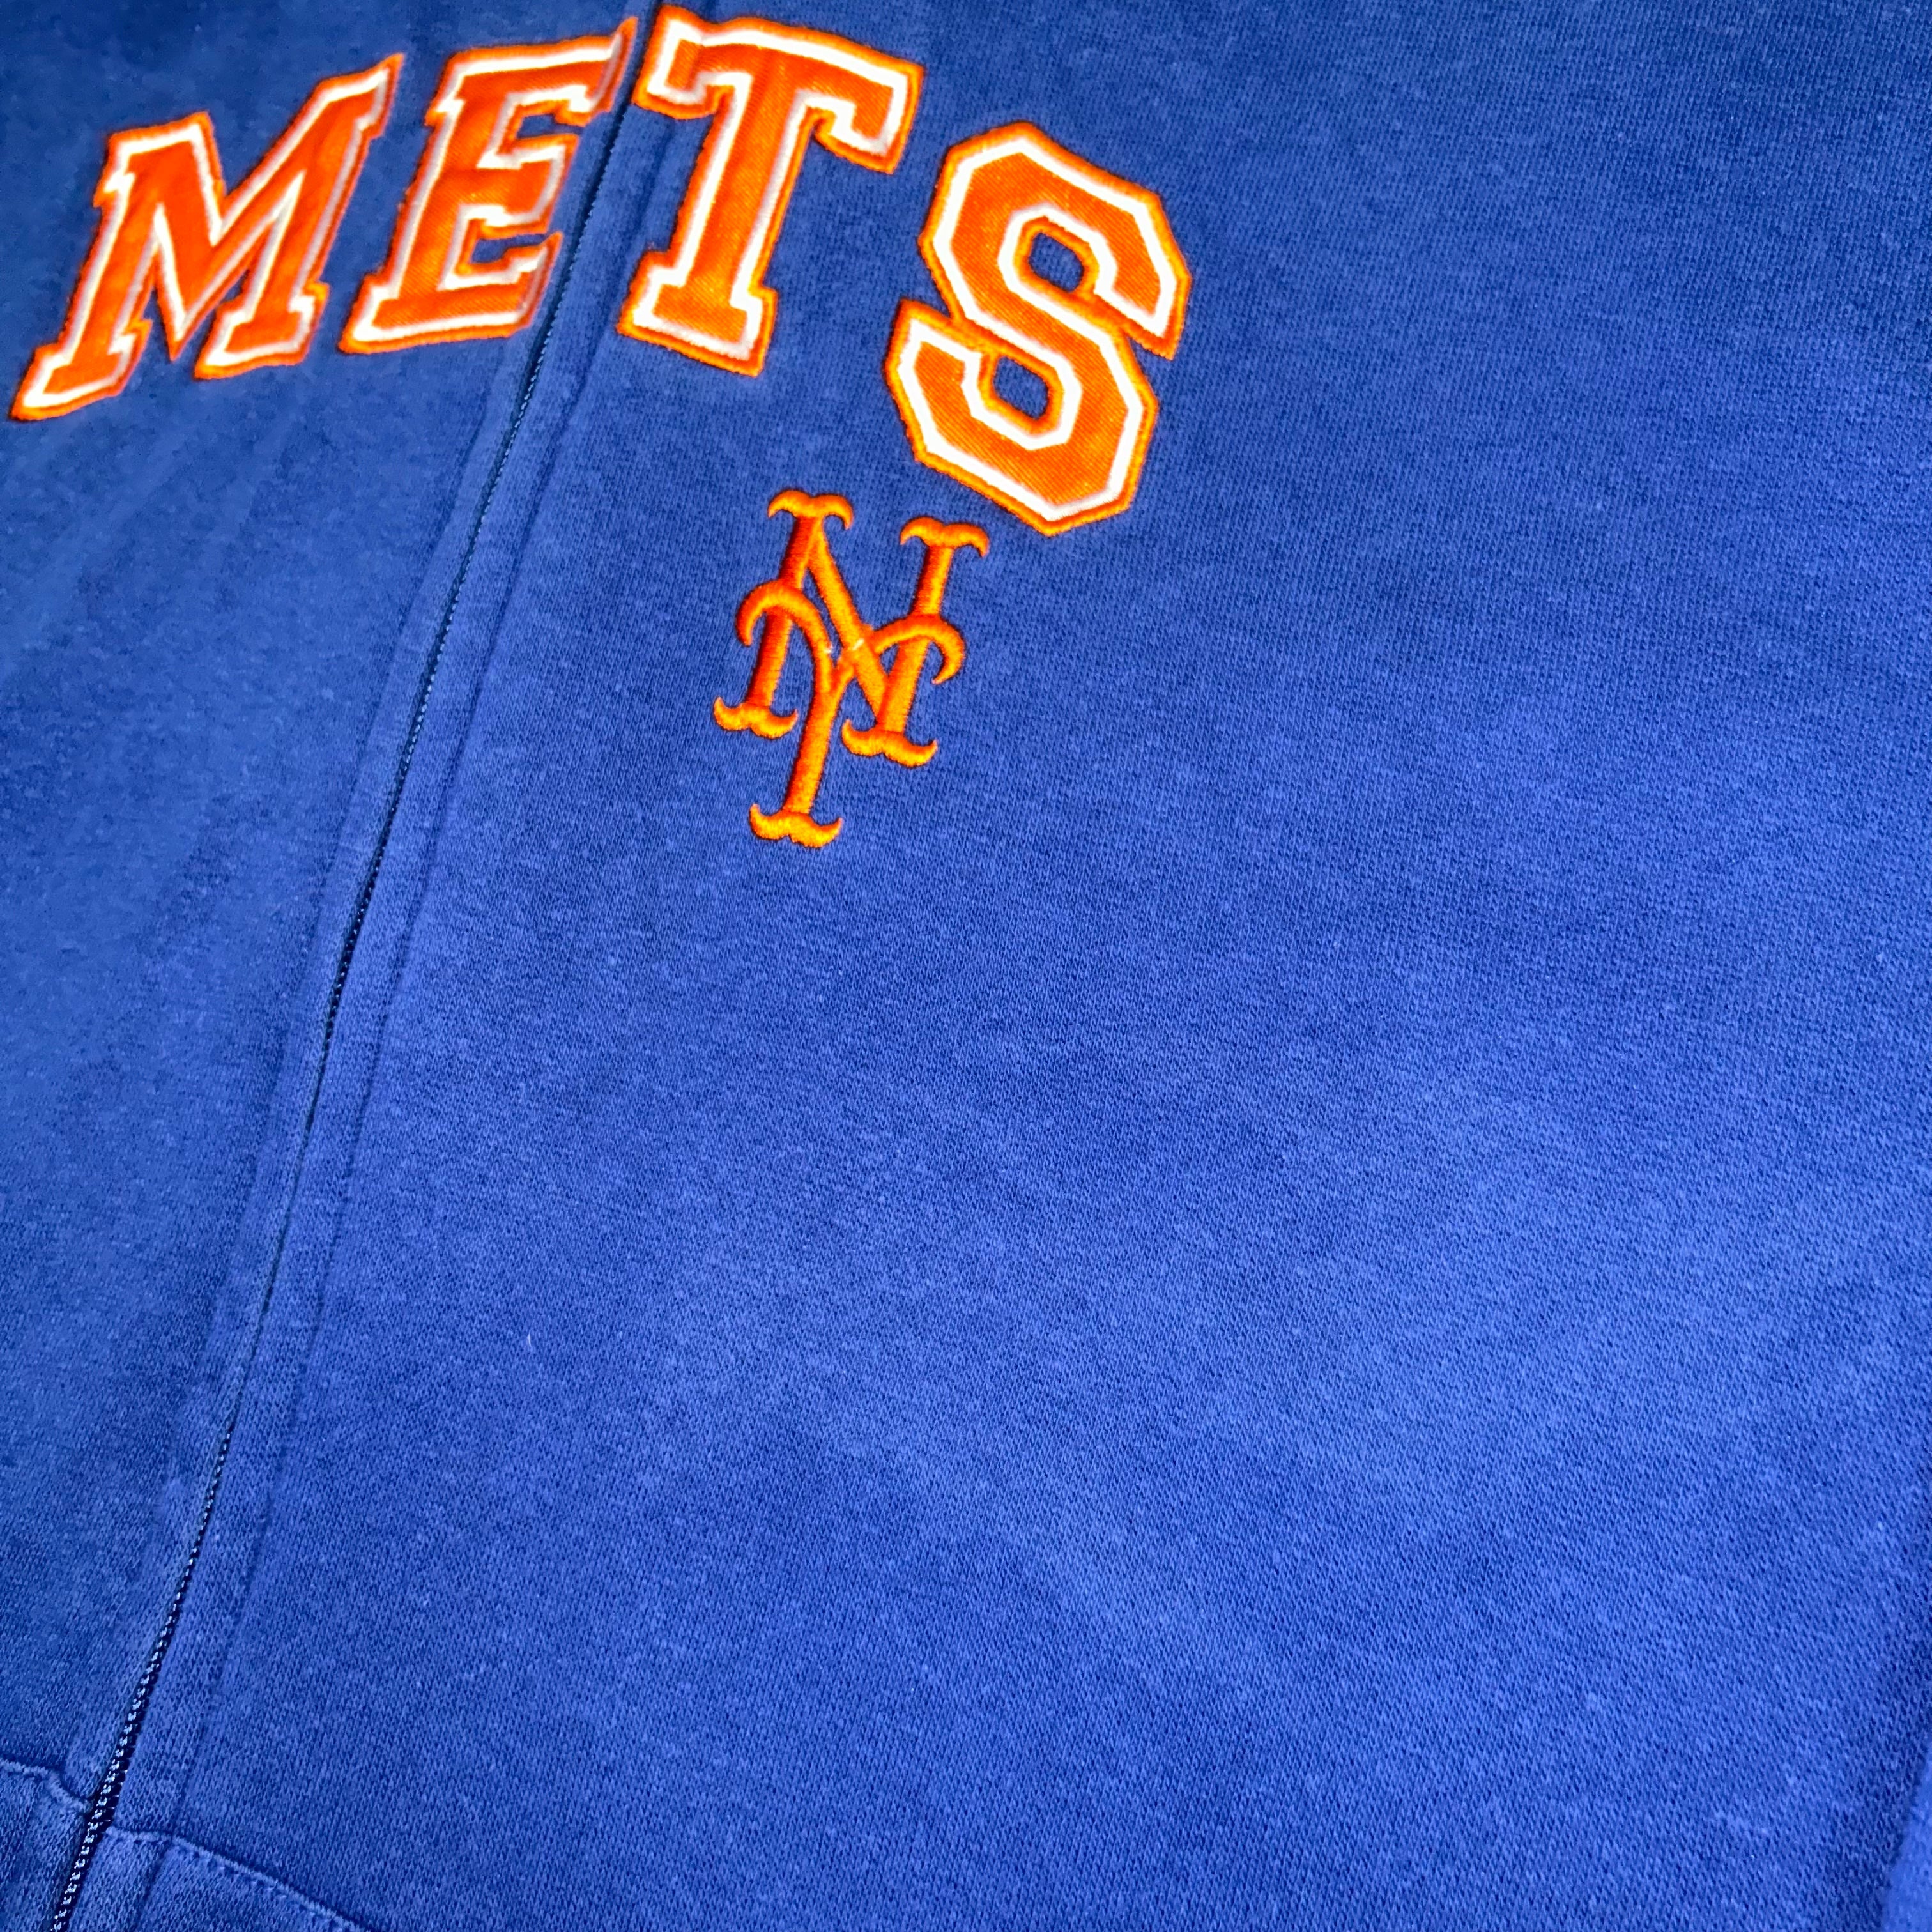 Felpa New York Mets MLB Adidas  (M)